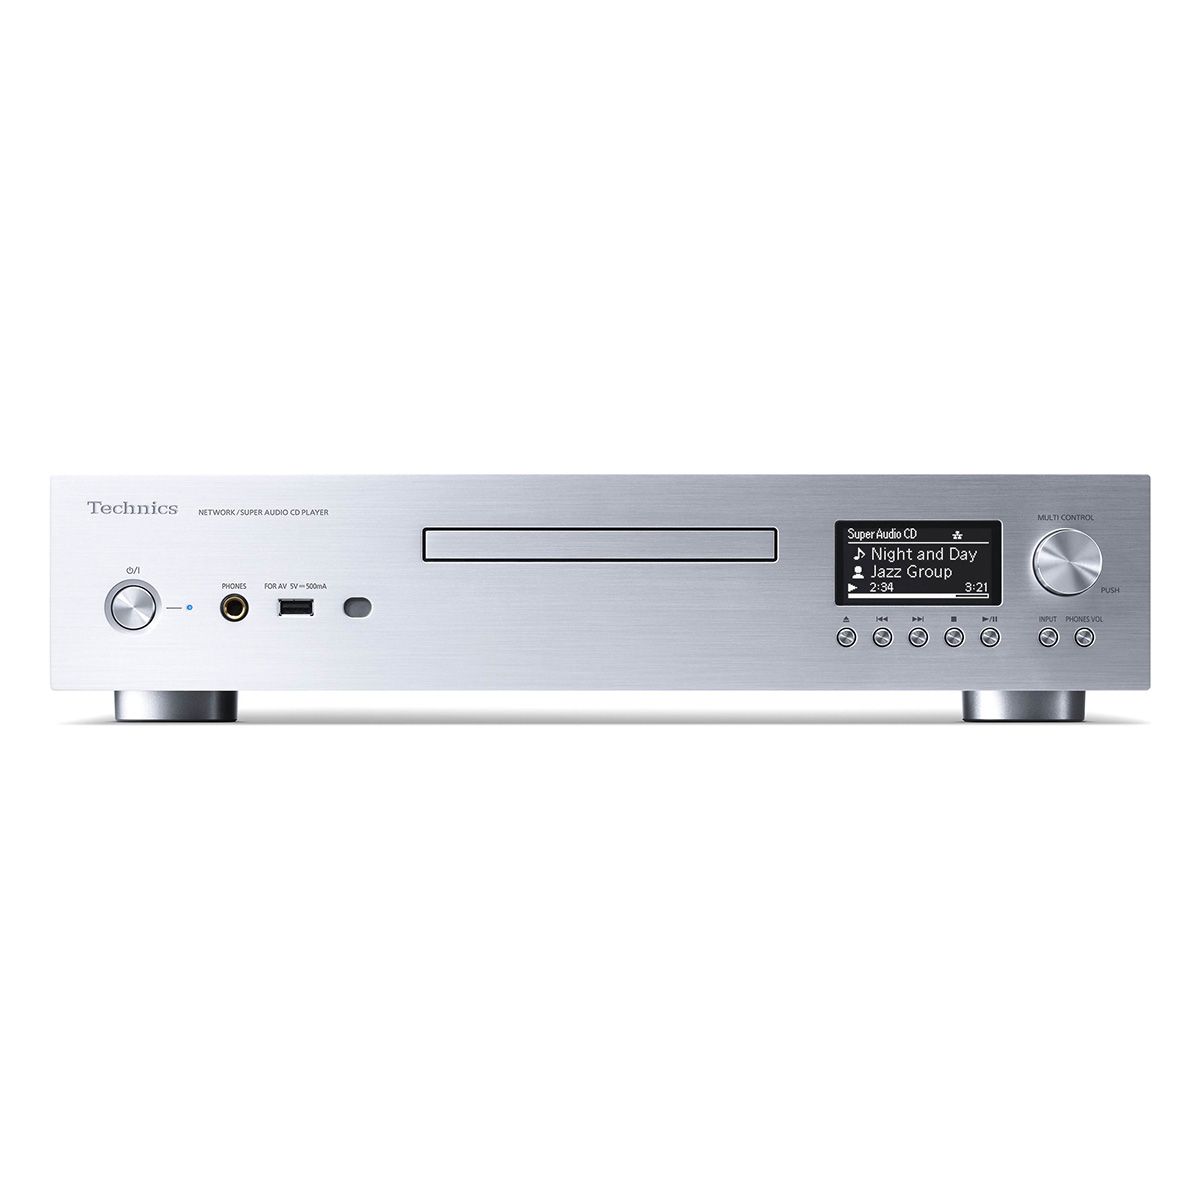 Technics SL-G700M2 CD SACD Network Player & DAC - Silver - front view